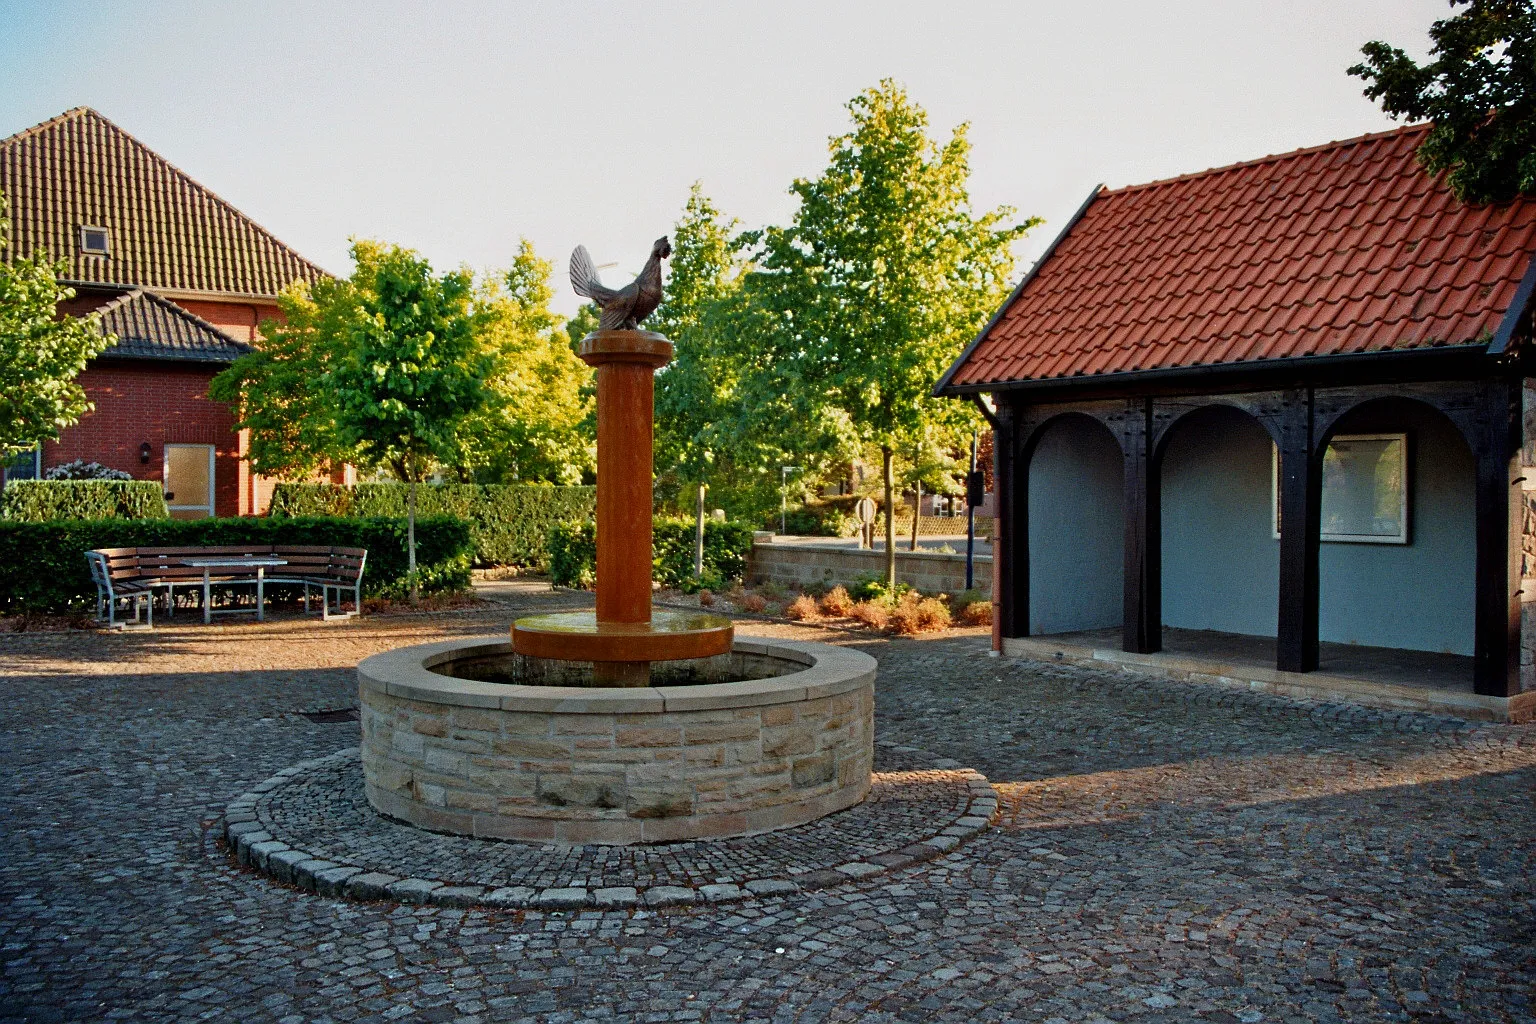 Photo showing: Village square of Hopsten-Halverde, Kreis Steinfurt, North Rhine-Westphalia, Germany.